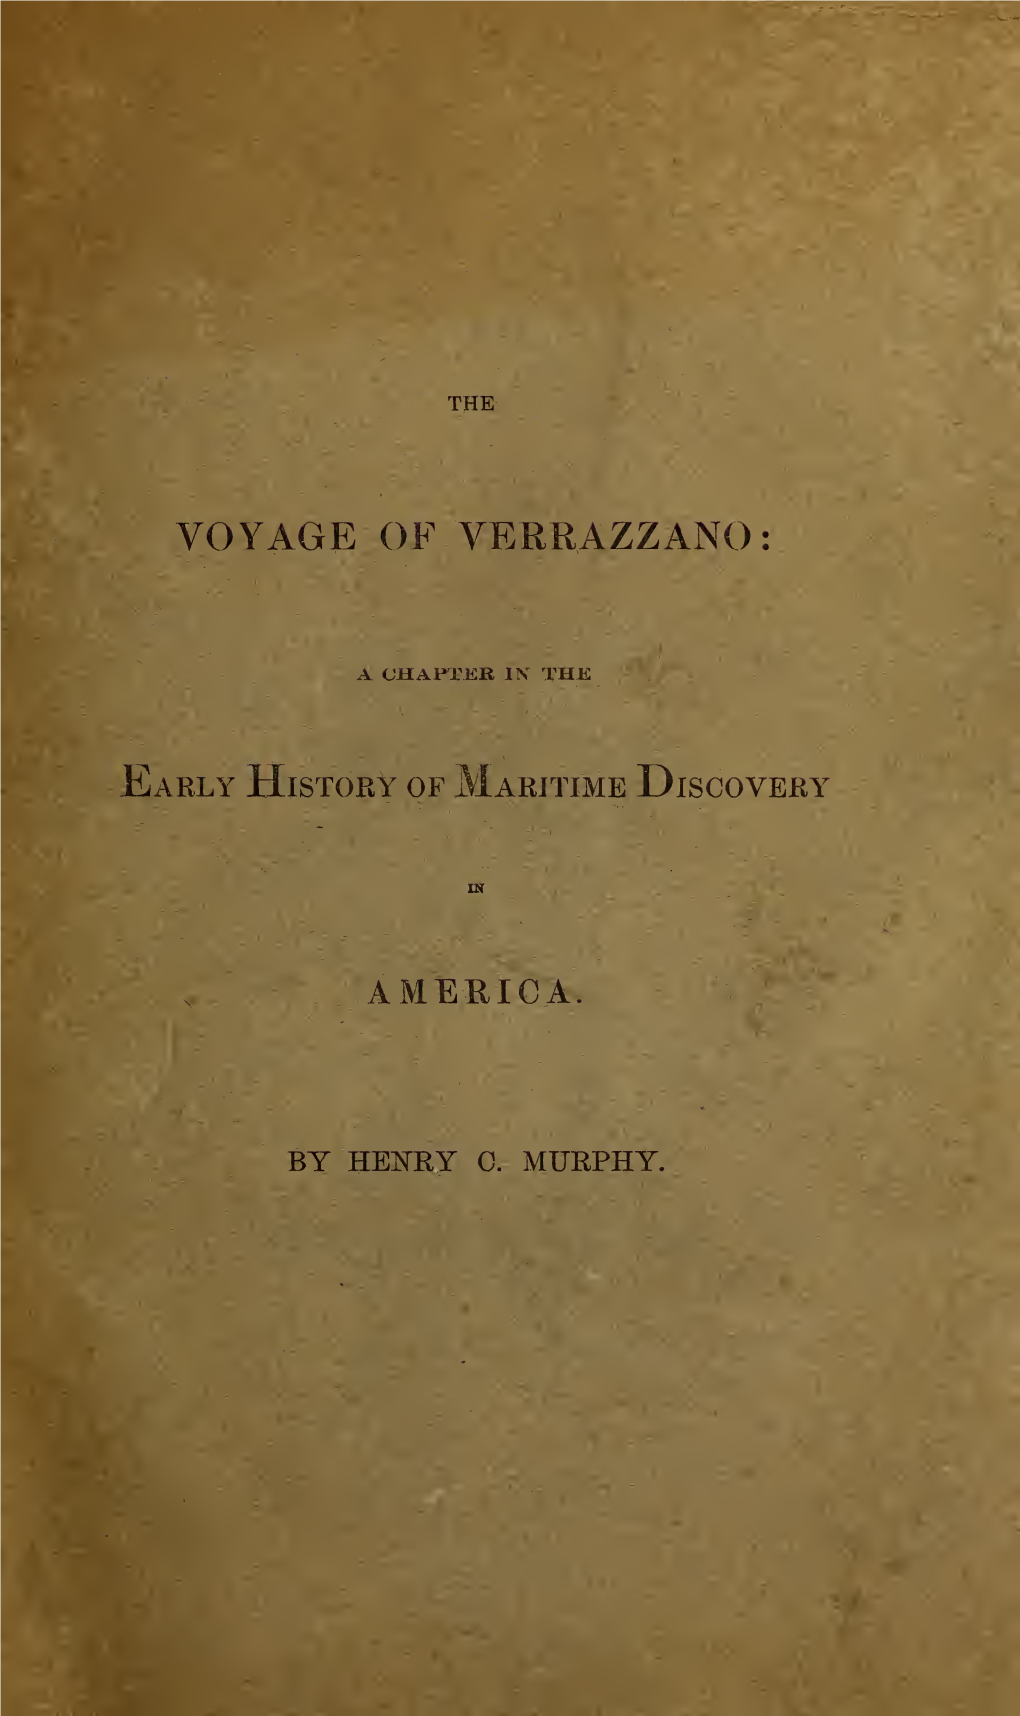 The Voyage of Verrazzano, 29